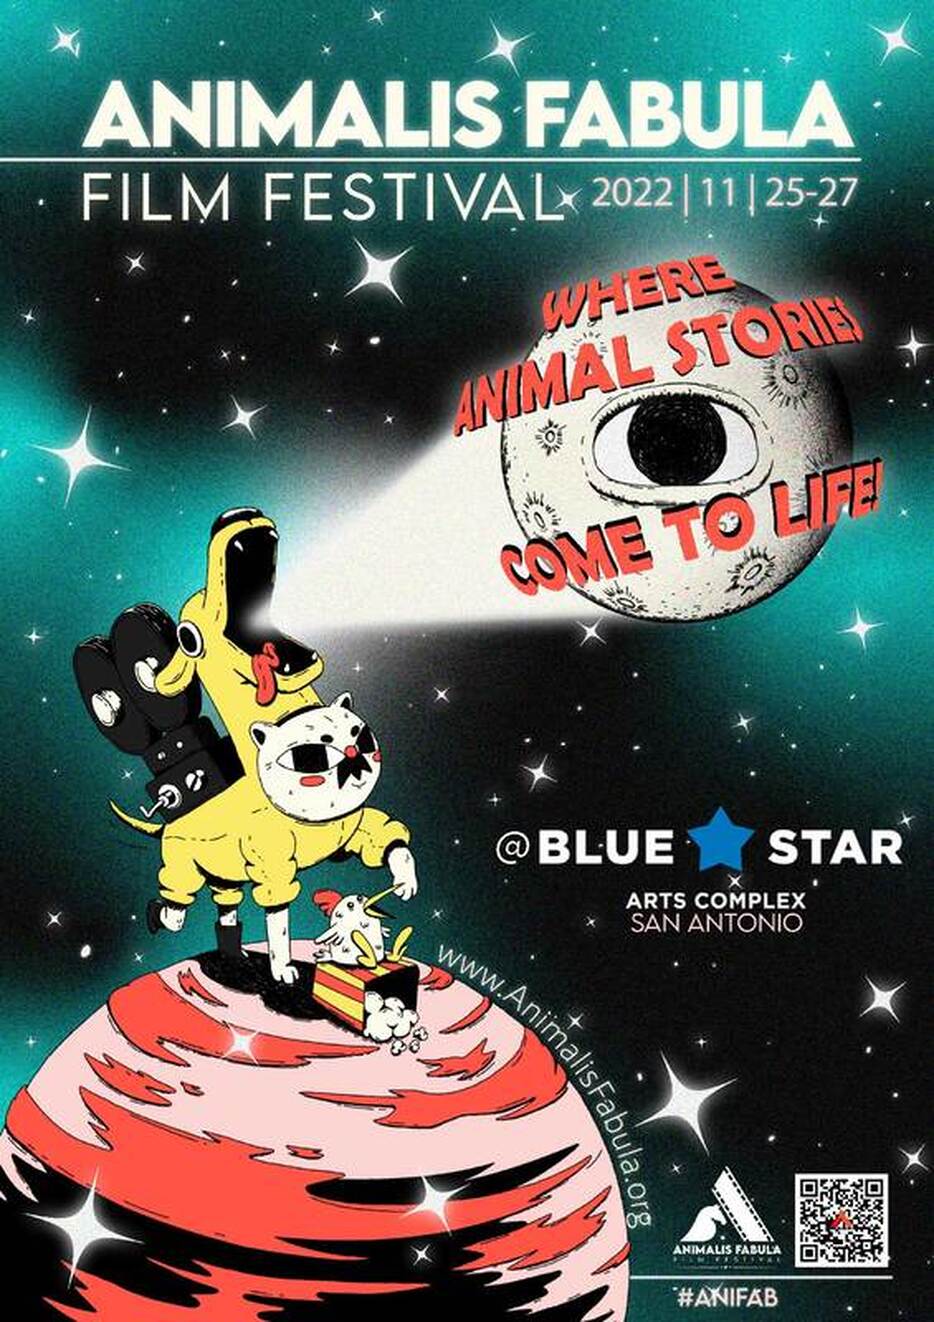 Animalis Fabula Film Festival Official 2022 Poster